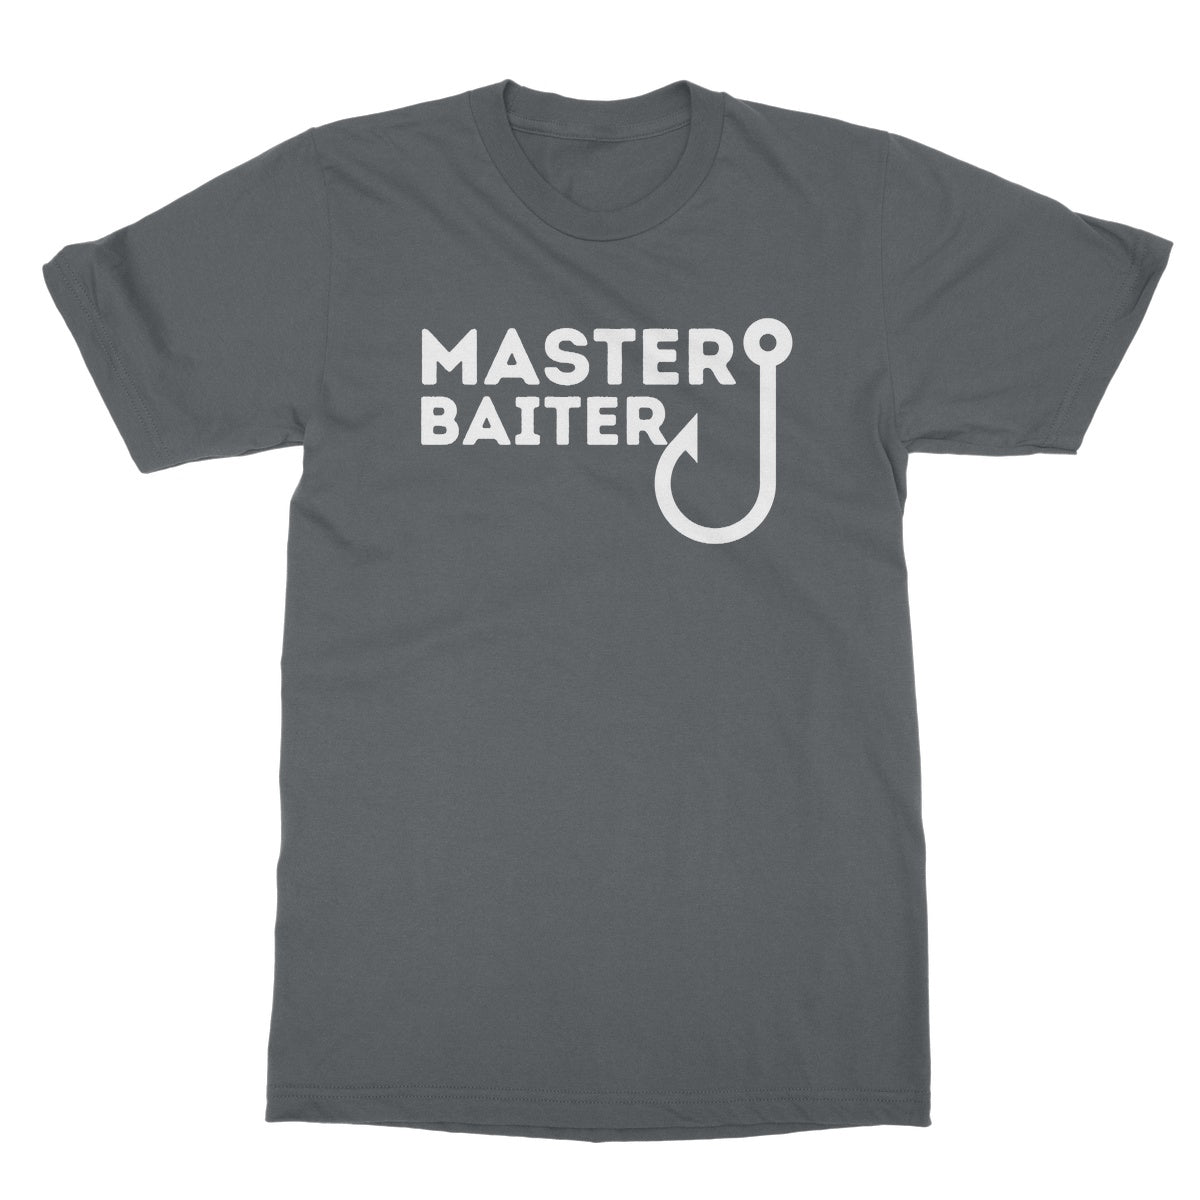 Master Baiter T-Shirt, Funny Fishing Pun T-Shirt